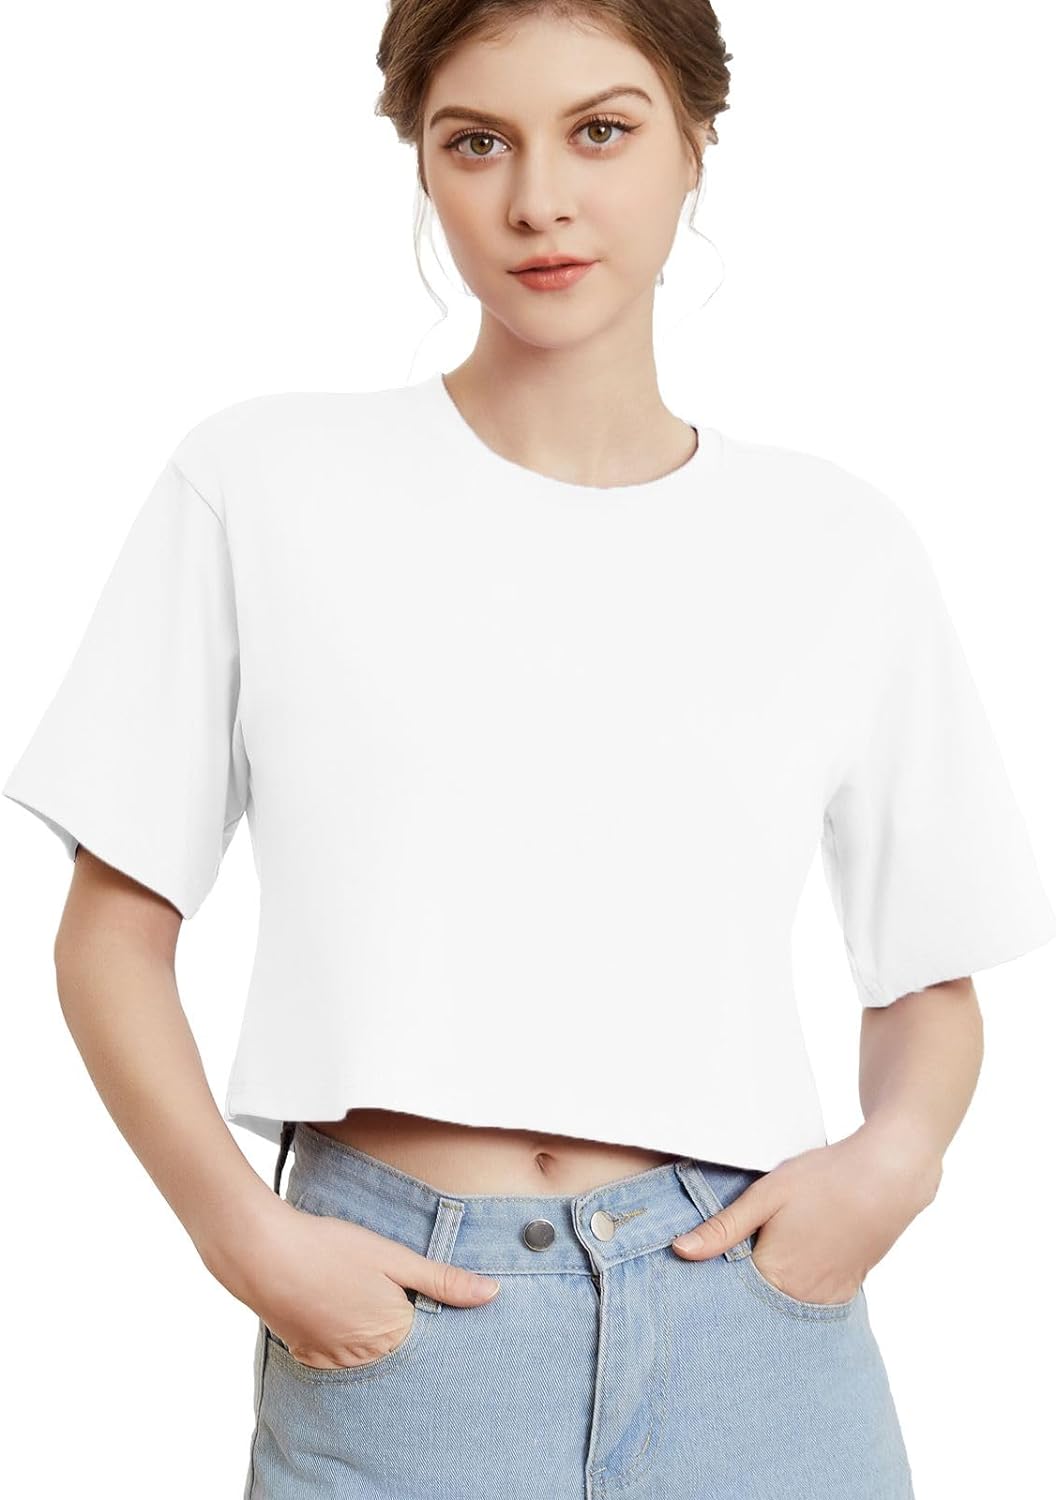 Gemgru Cotton Crop Tops for Women Half Sleeve Boxy Tee Cropped Tshirt Loose Fit Waist Length Short Shirts